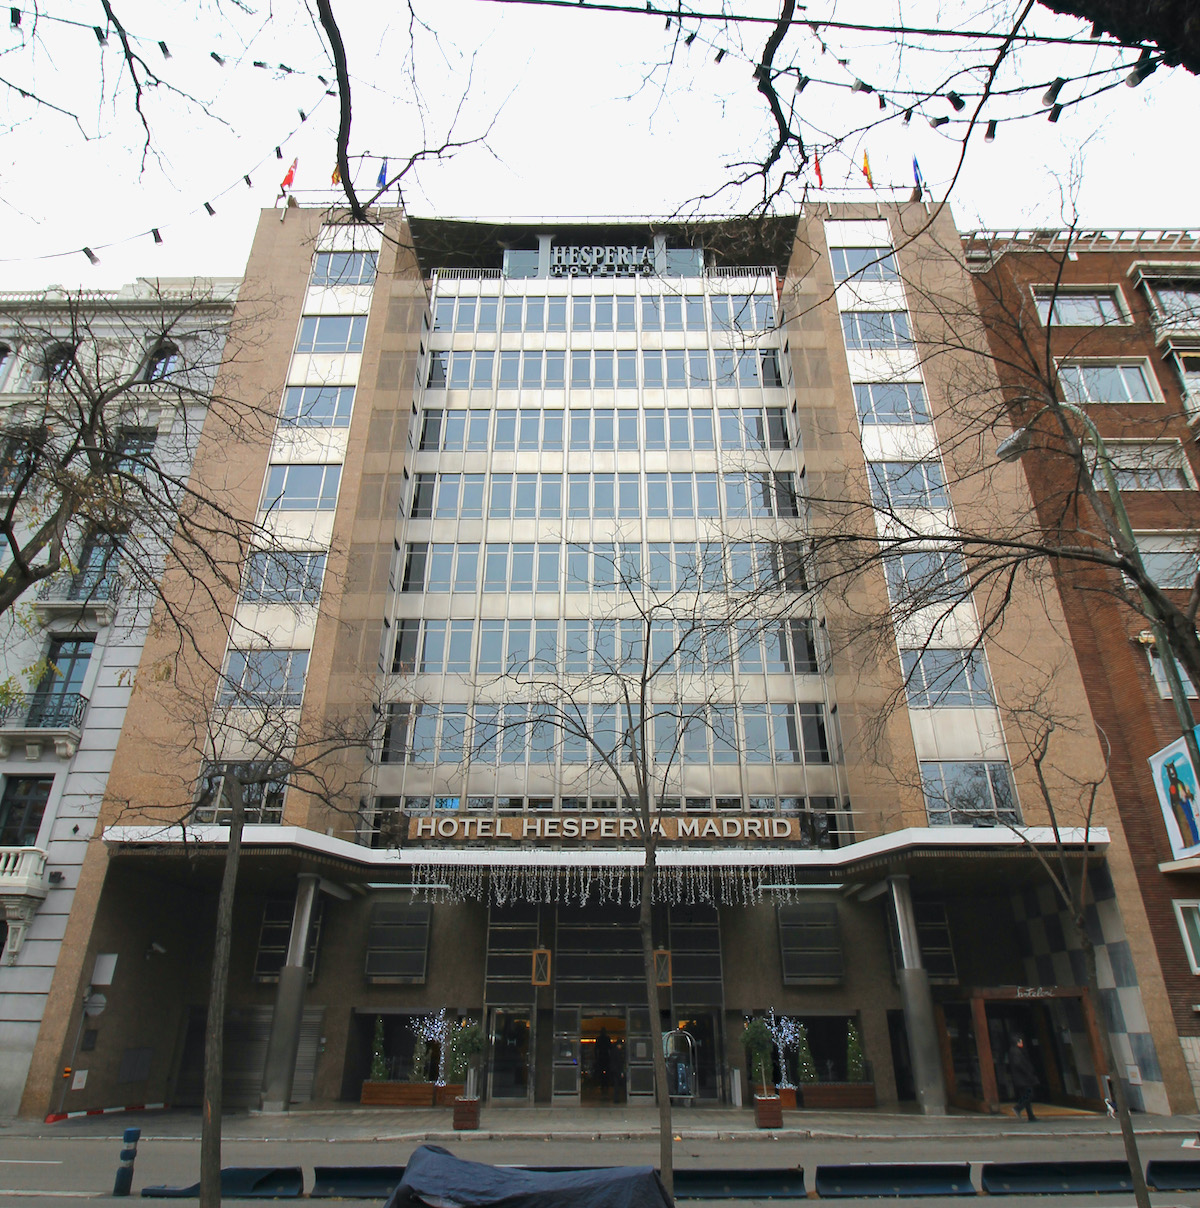 Façade of the Hyatt Regency Hesperia hotel in Madrid.